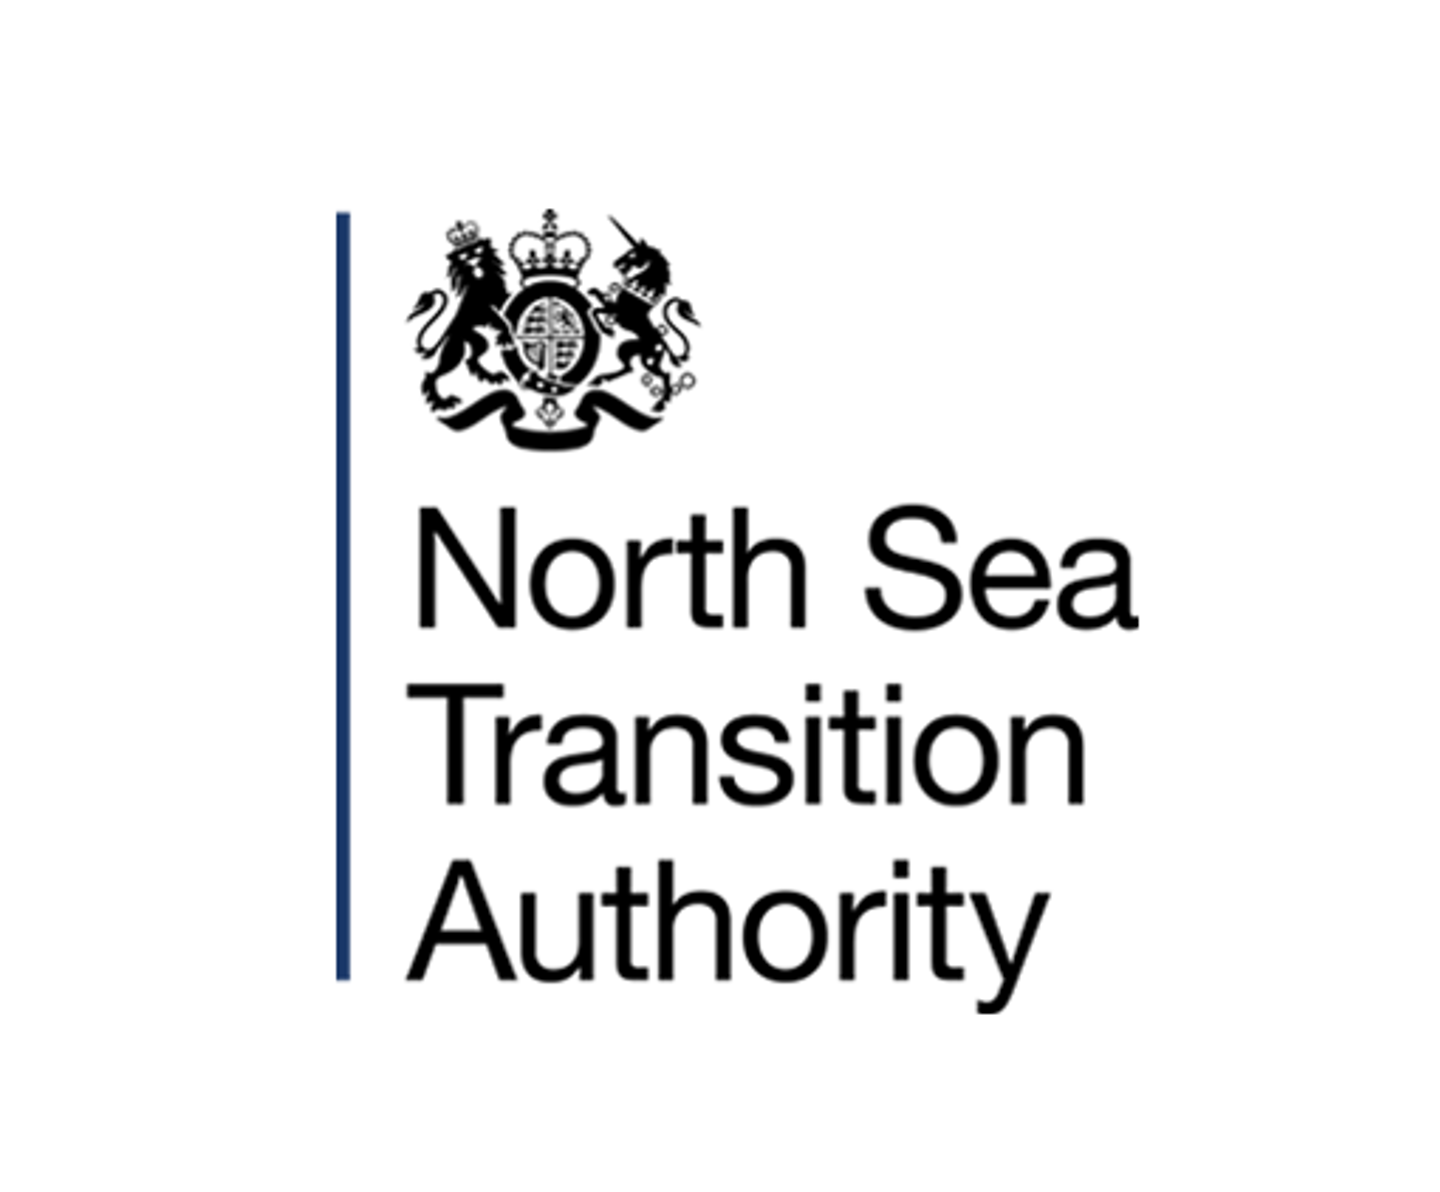 The Nsta Authority Logo